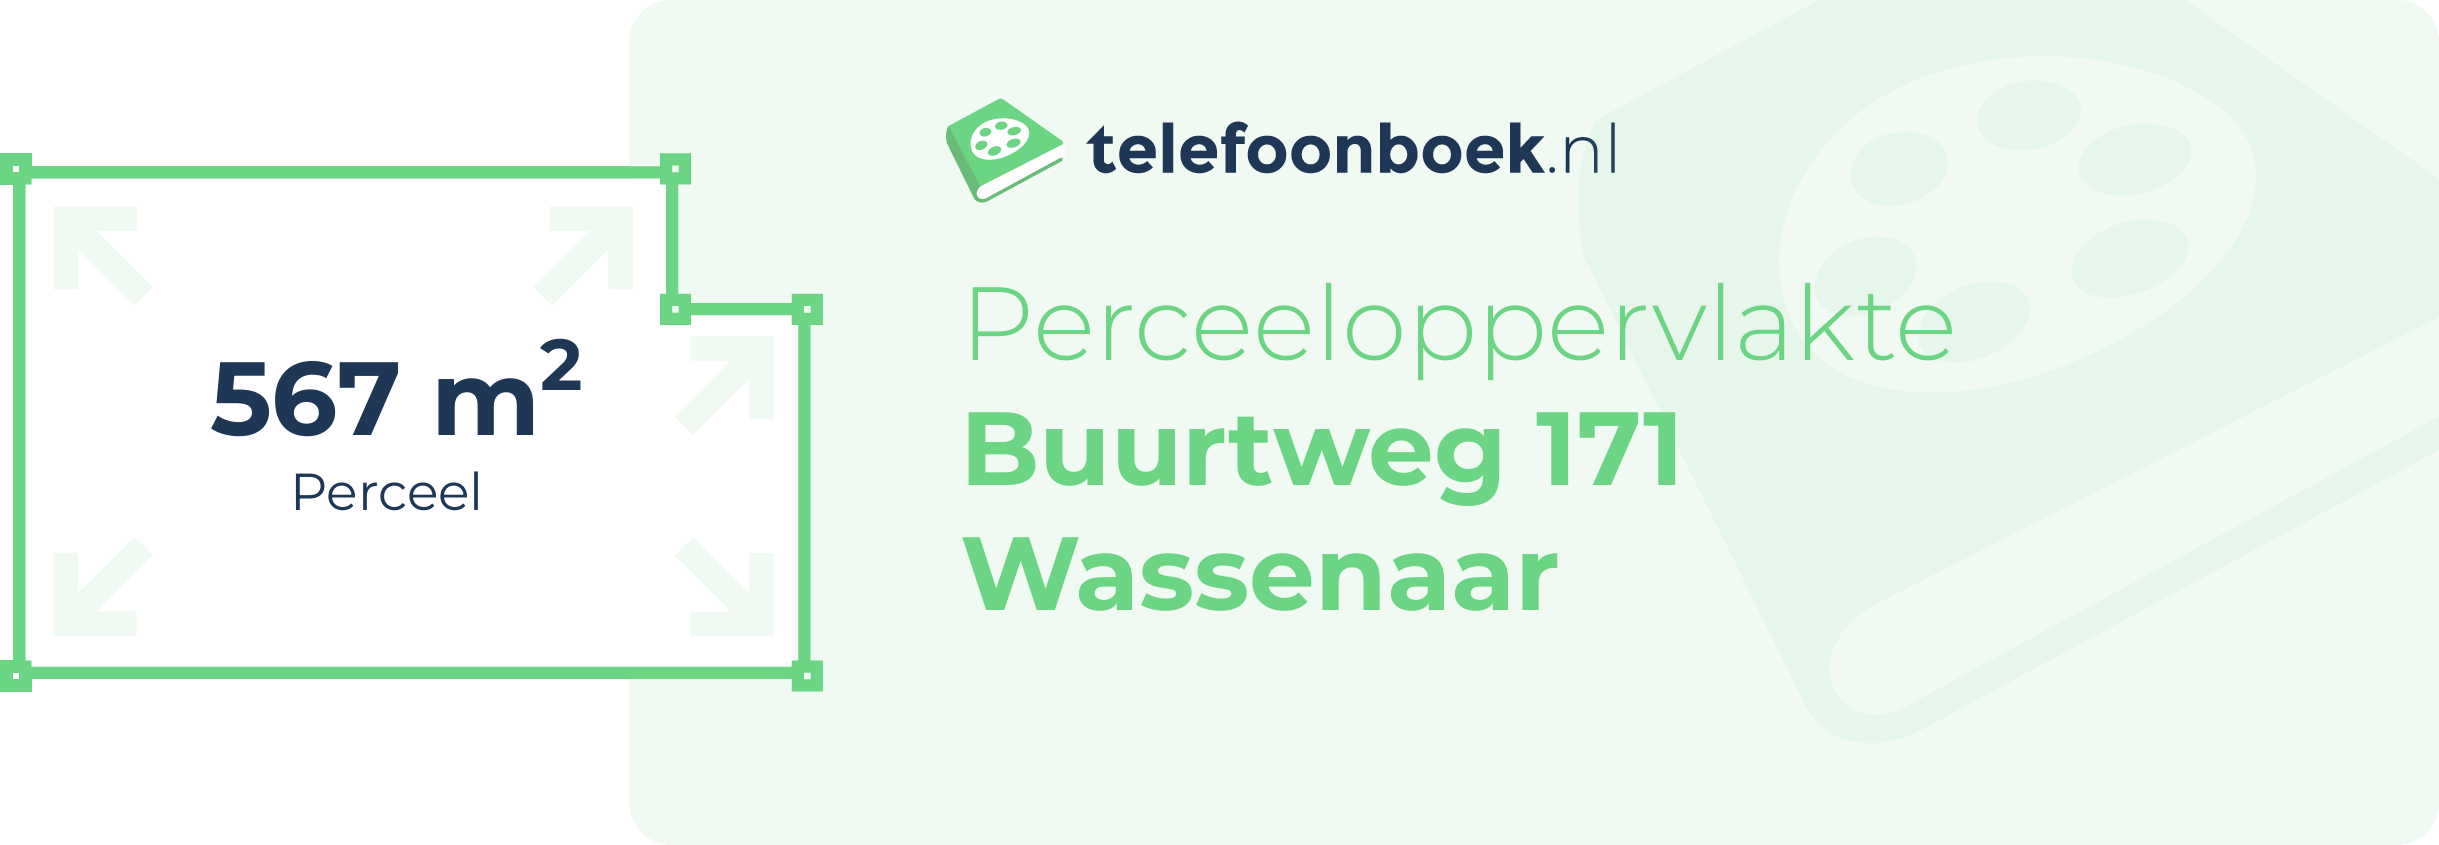 Perceeloppervlakte Buurtweg 171 Wassenaar